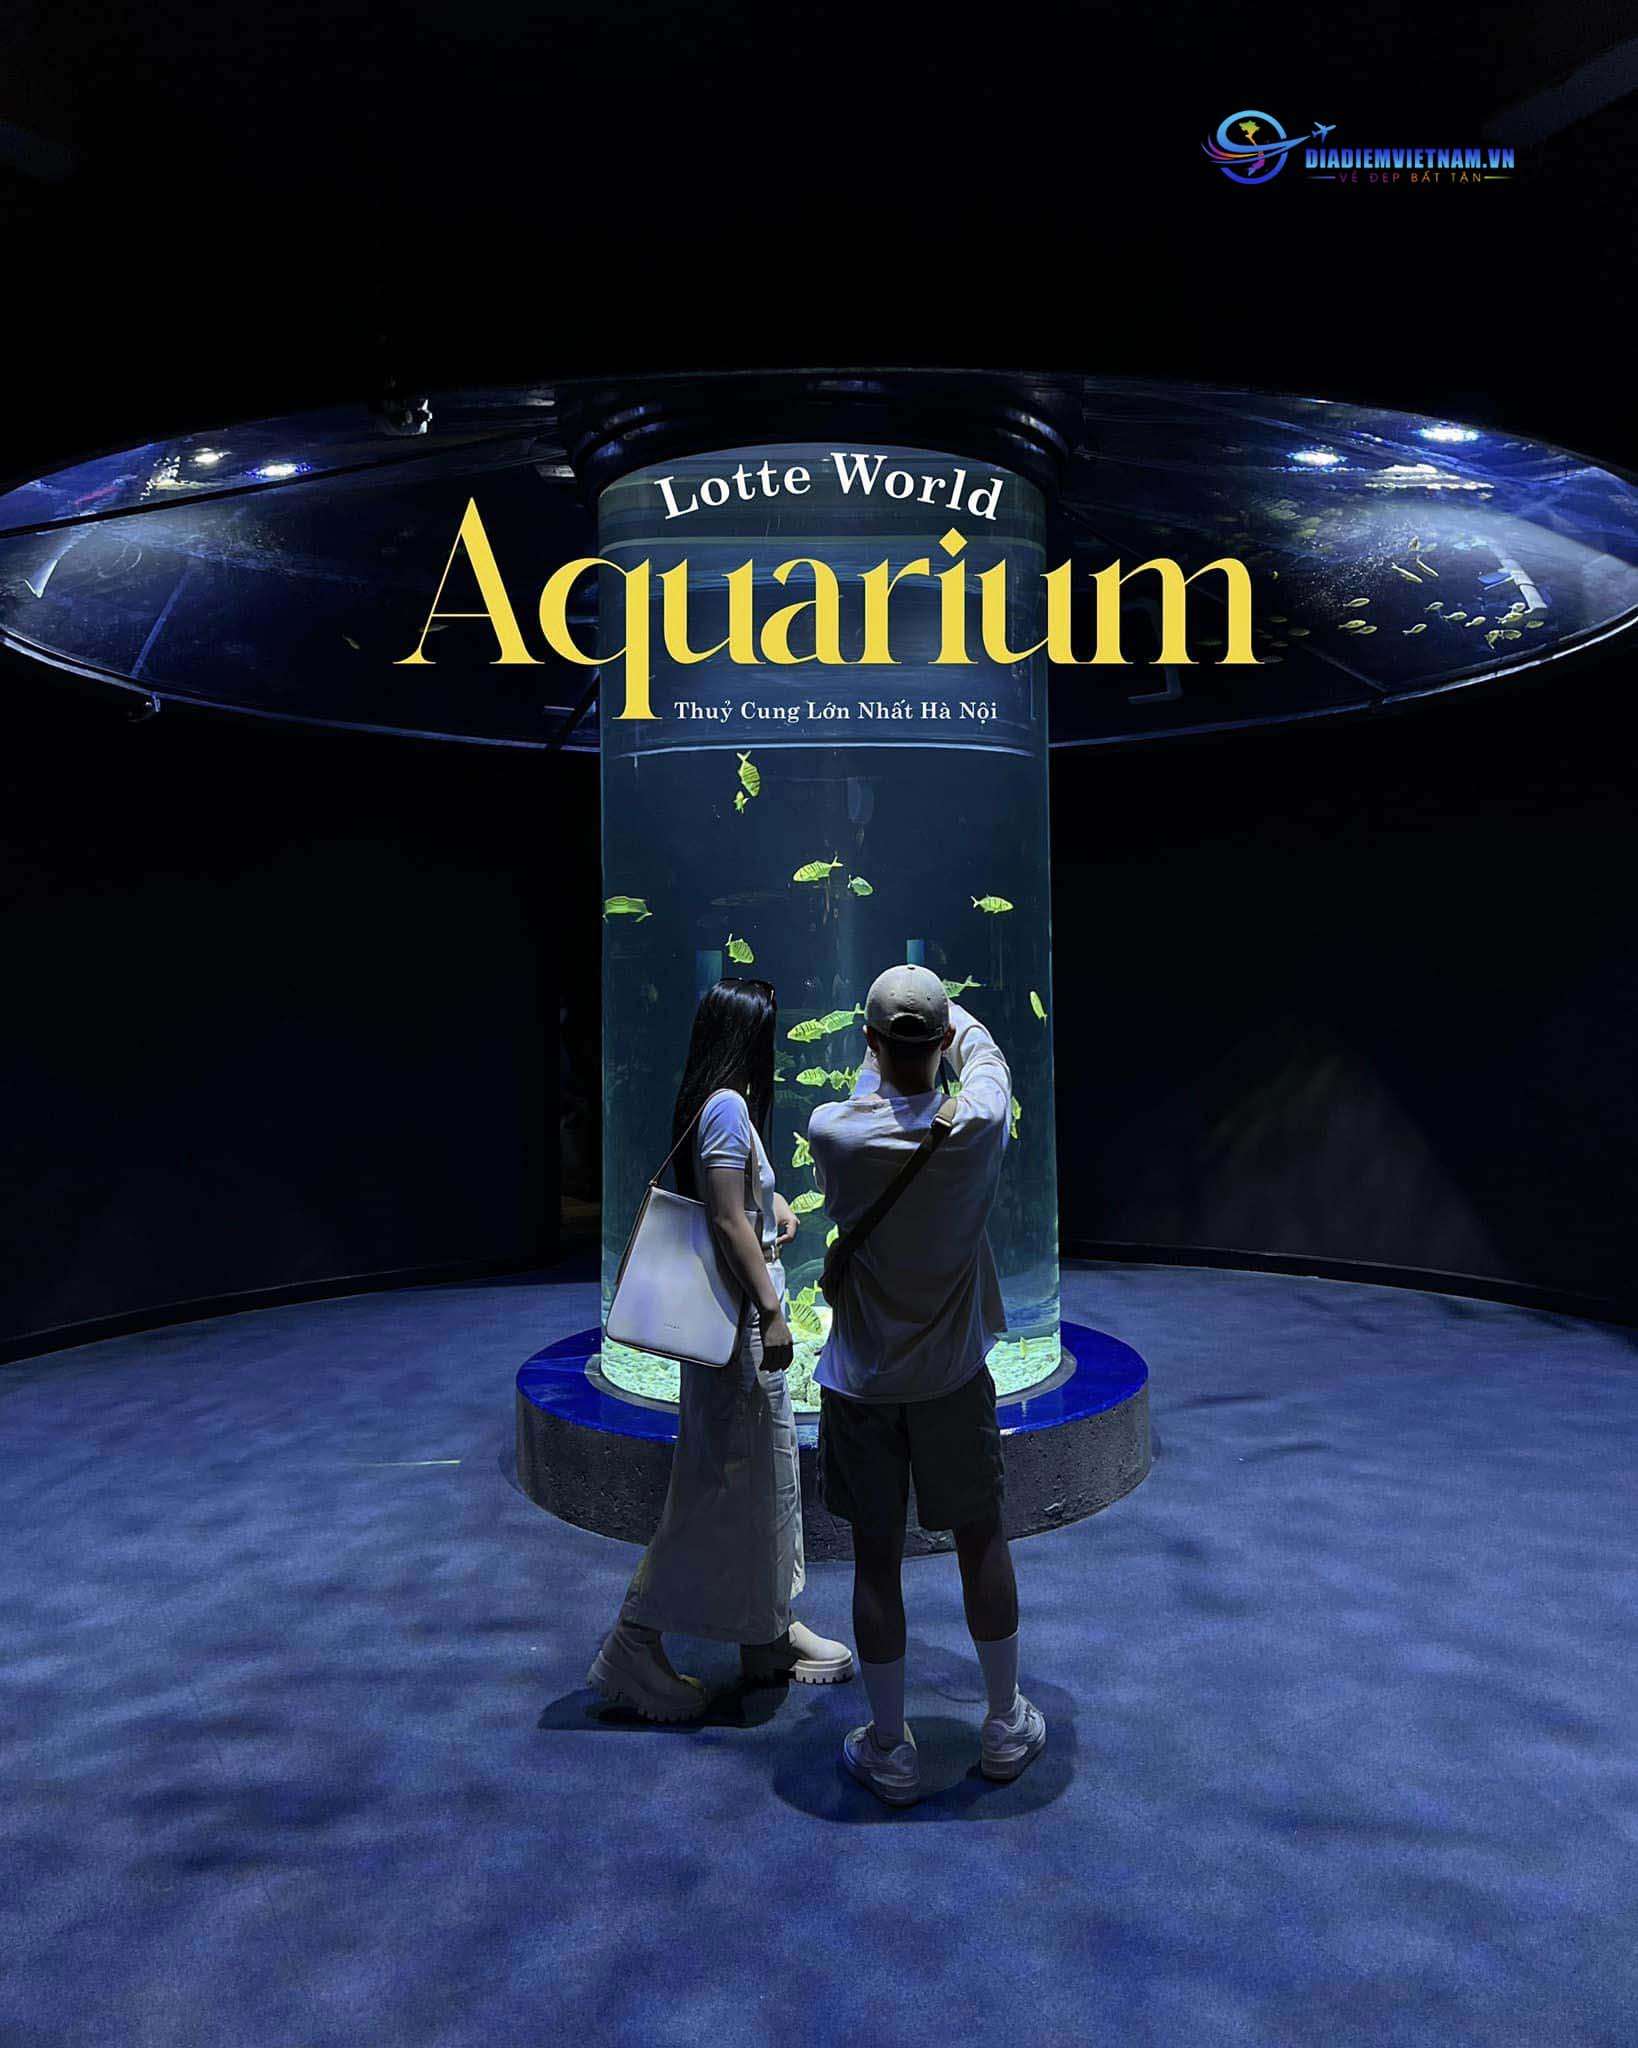 Thuỷ Cung Lottel Wold Aquarium